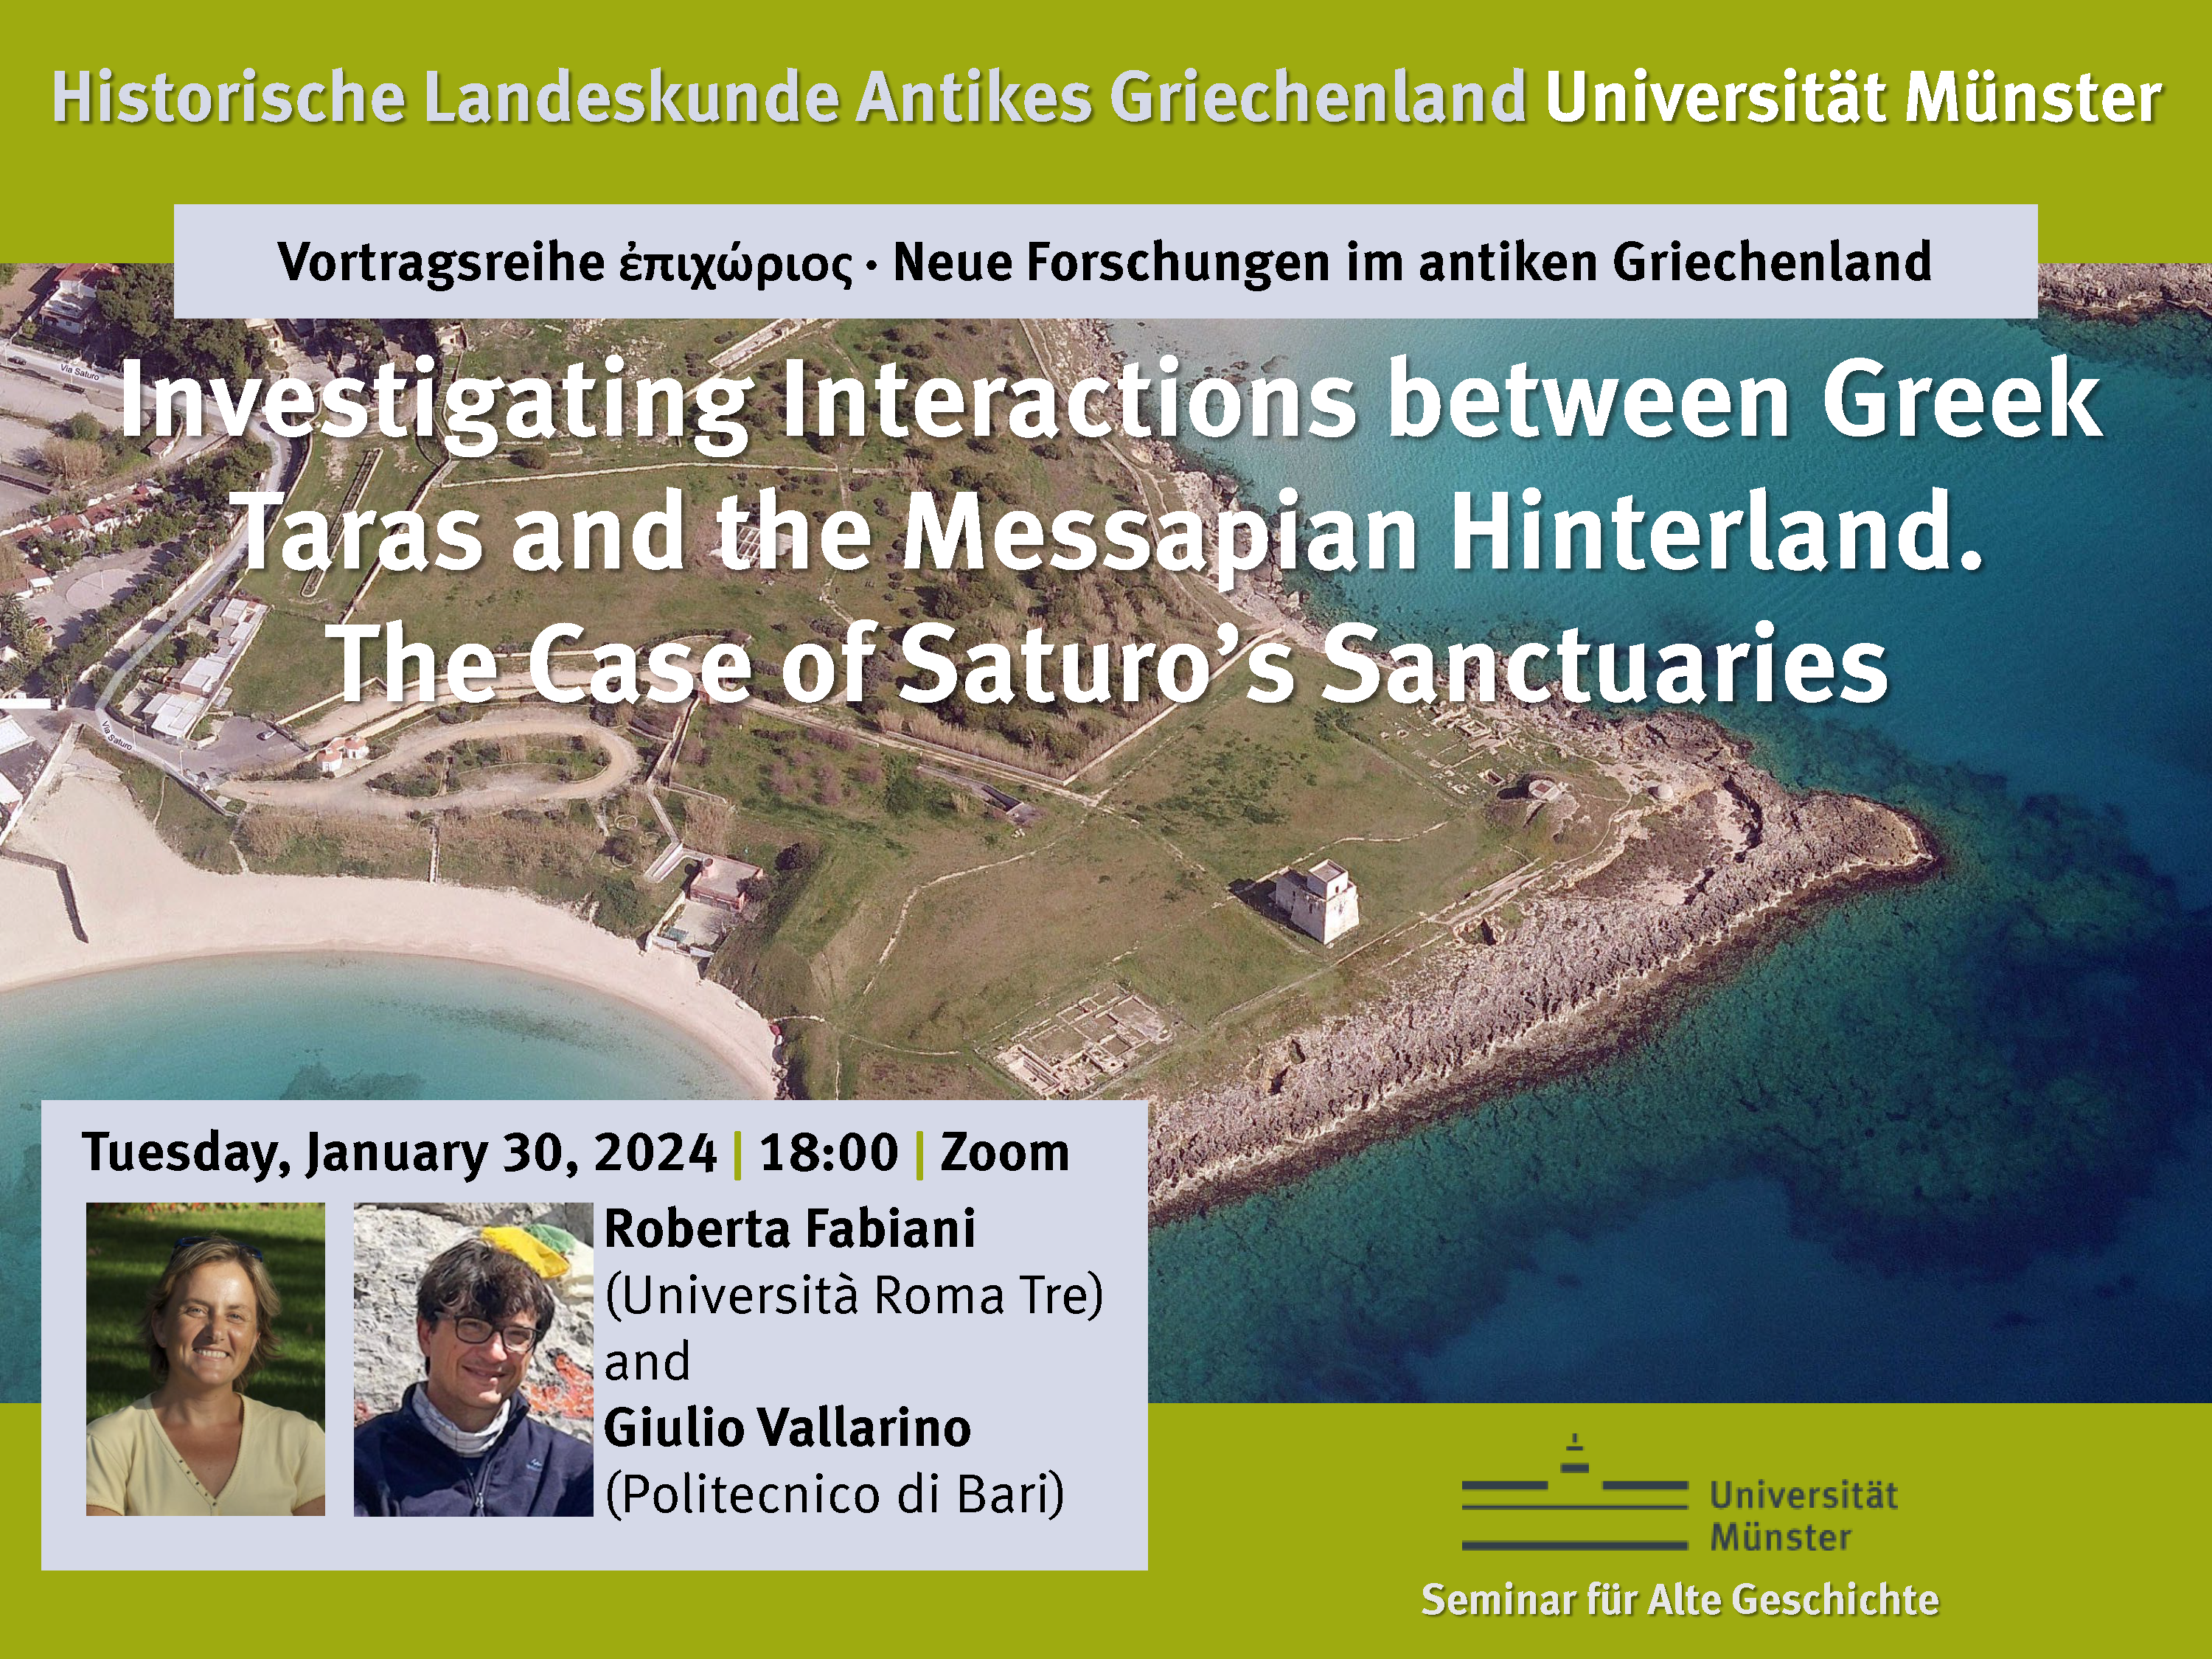 Poster for Epichorios lecture: Fabiani, Vallarino - Investigating Interactions between Greek Tarasand the Messapian Hinterland. The Case of Saturo’s Sanctuaries